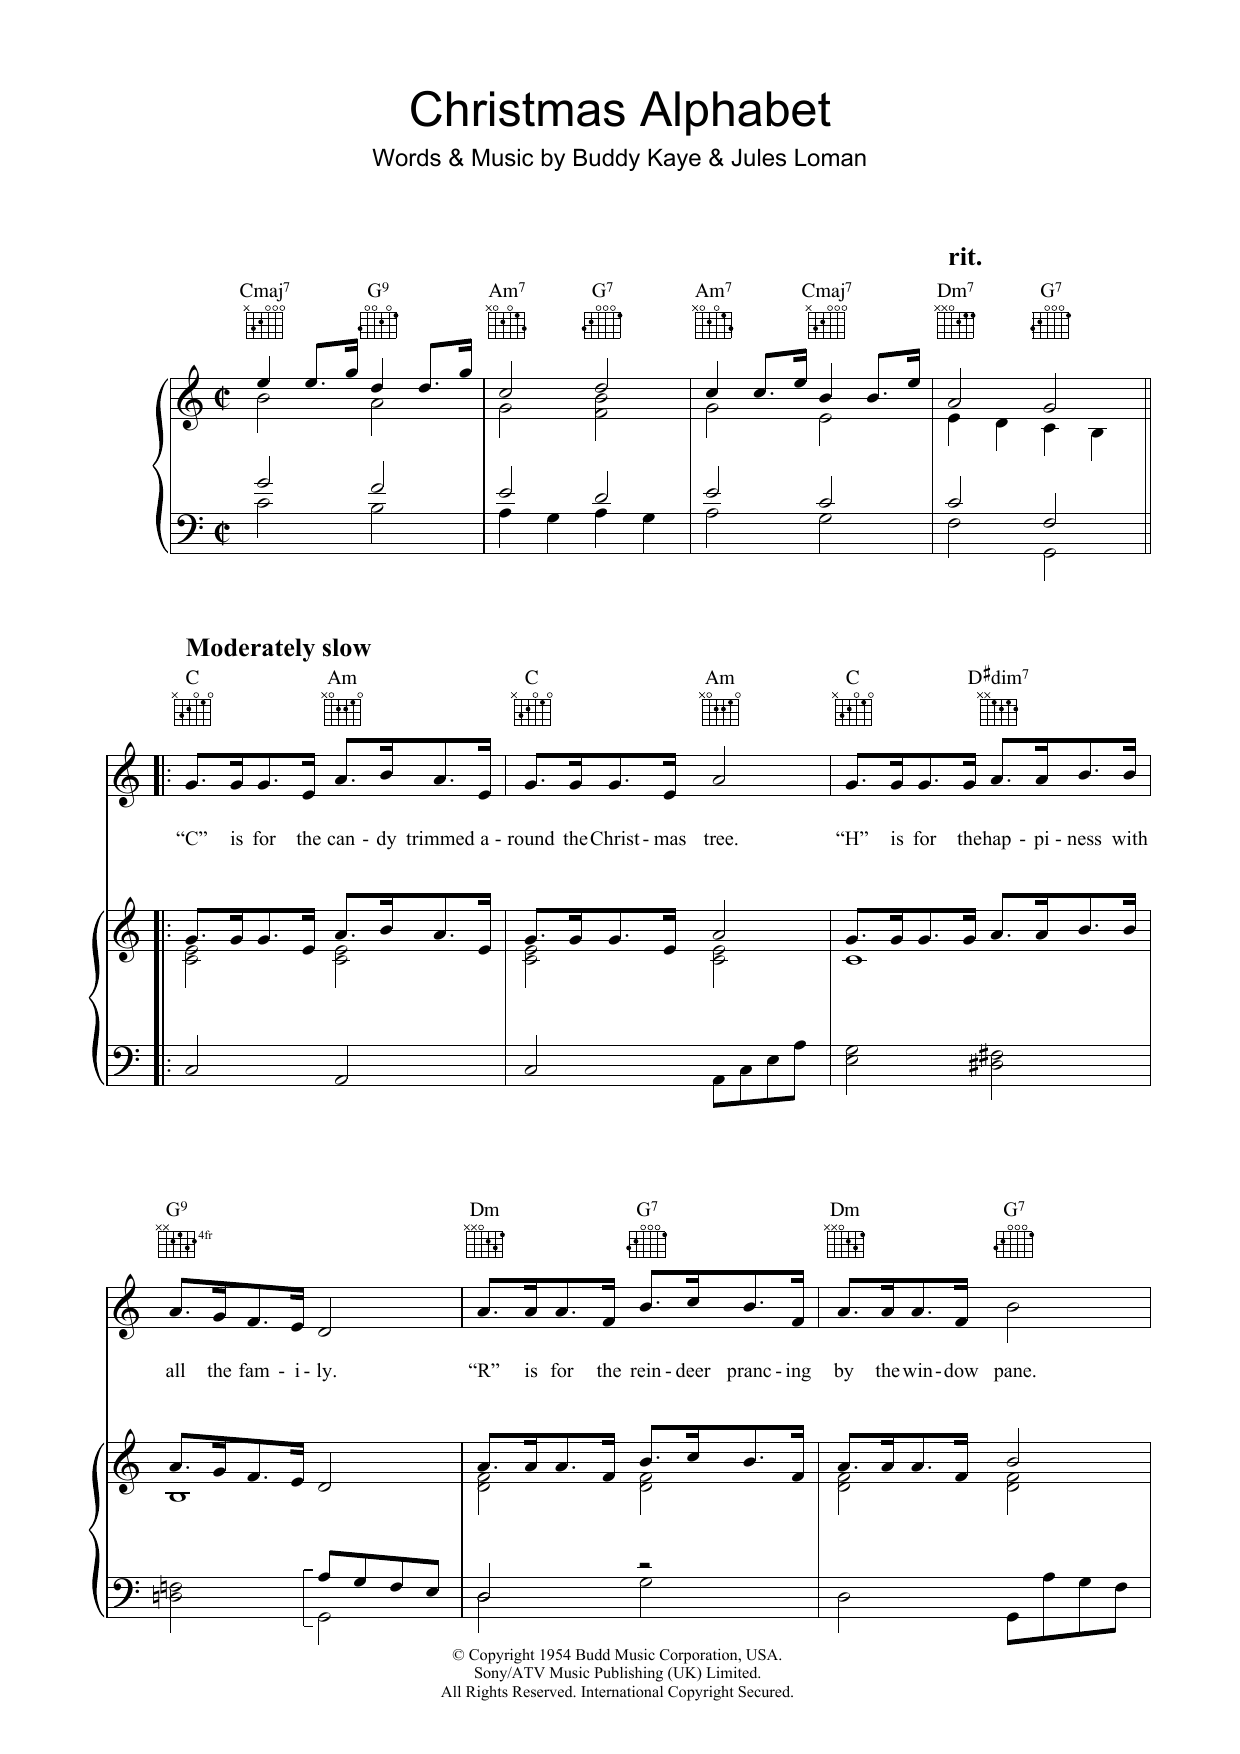 Download Buddy Kaye Christmas Alphabet Sheet Music